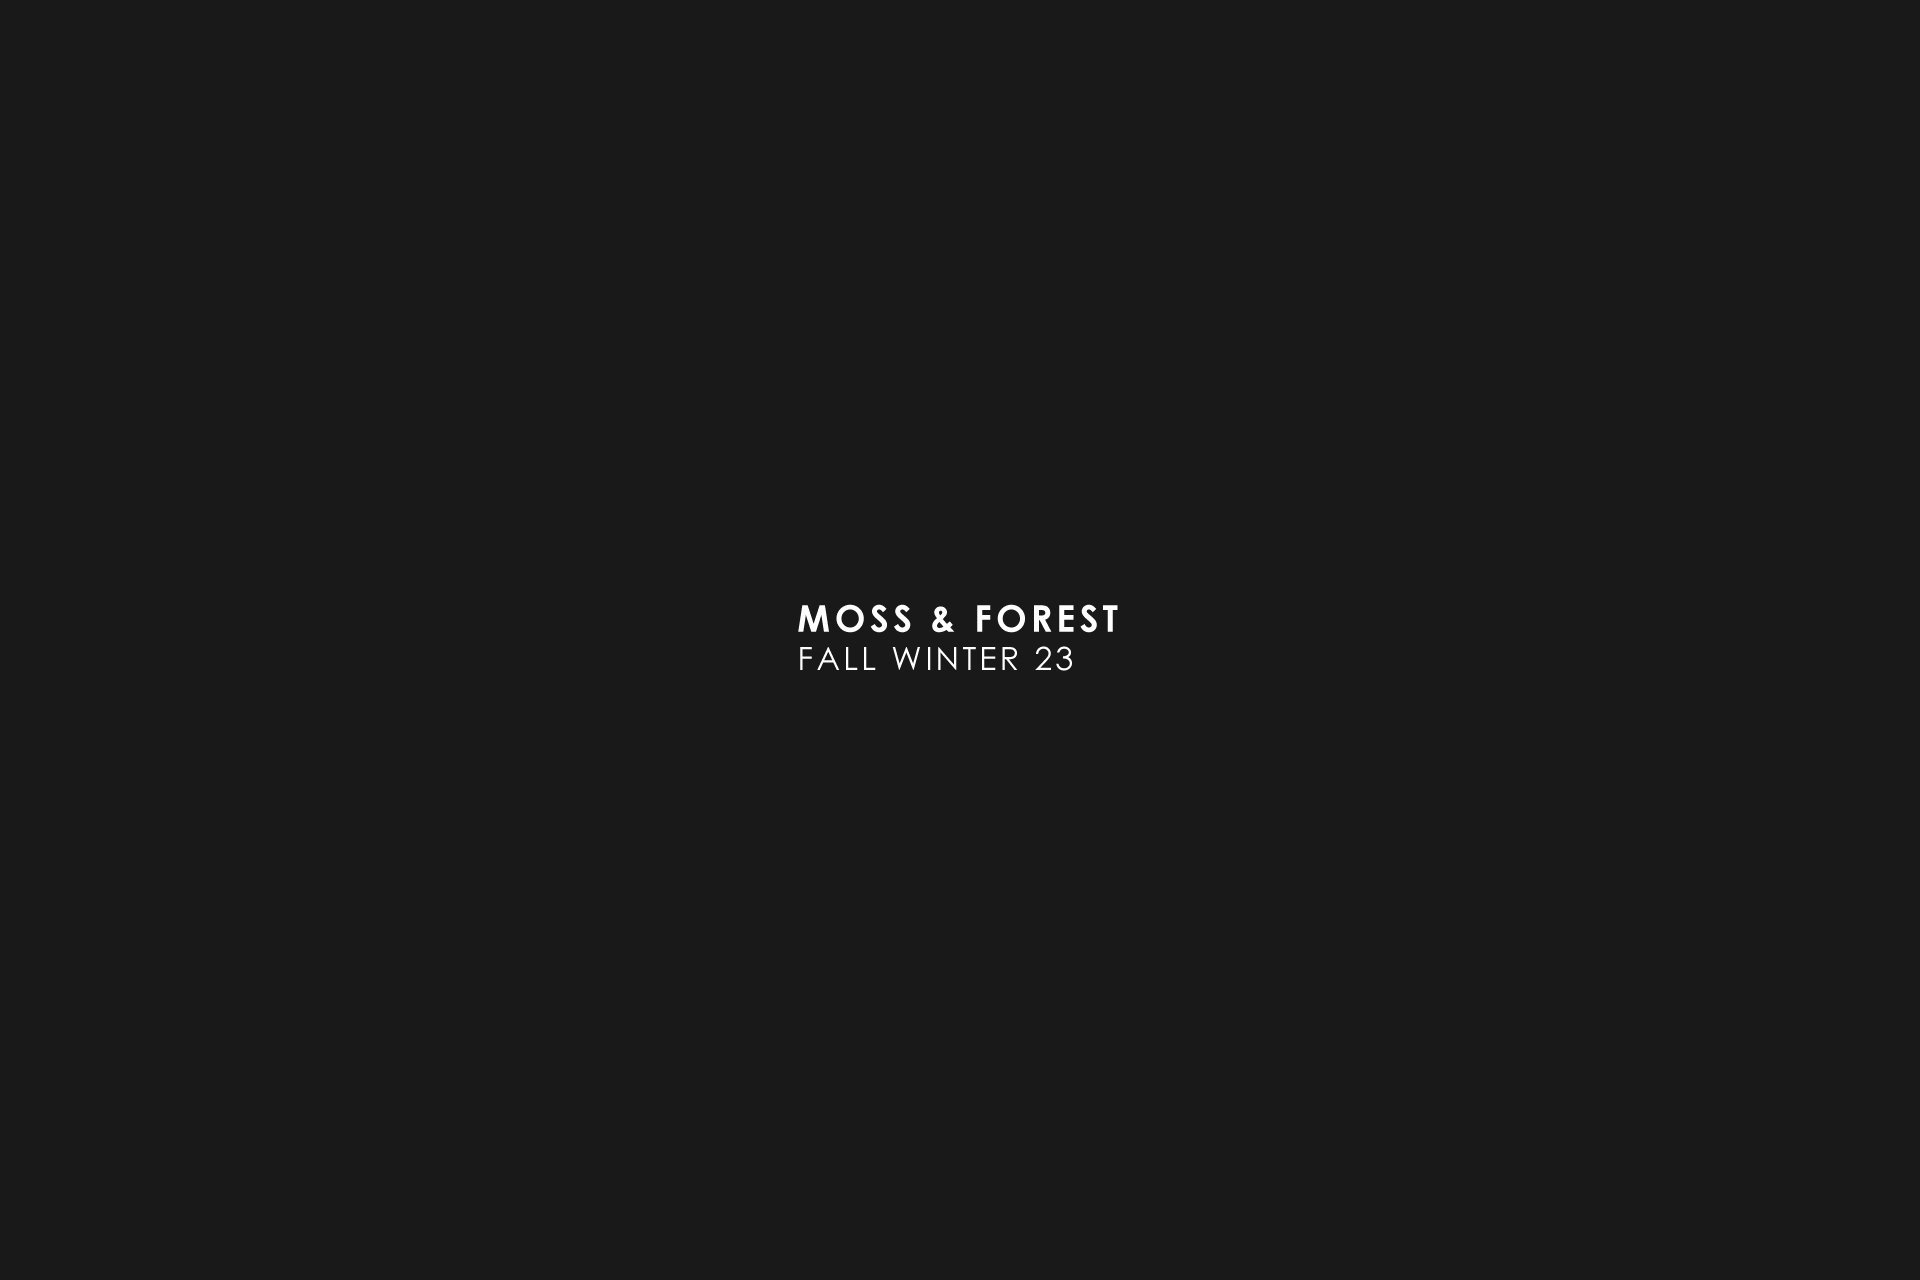 moss & forest